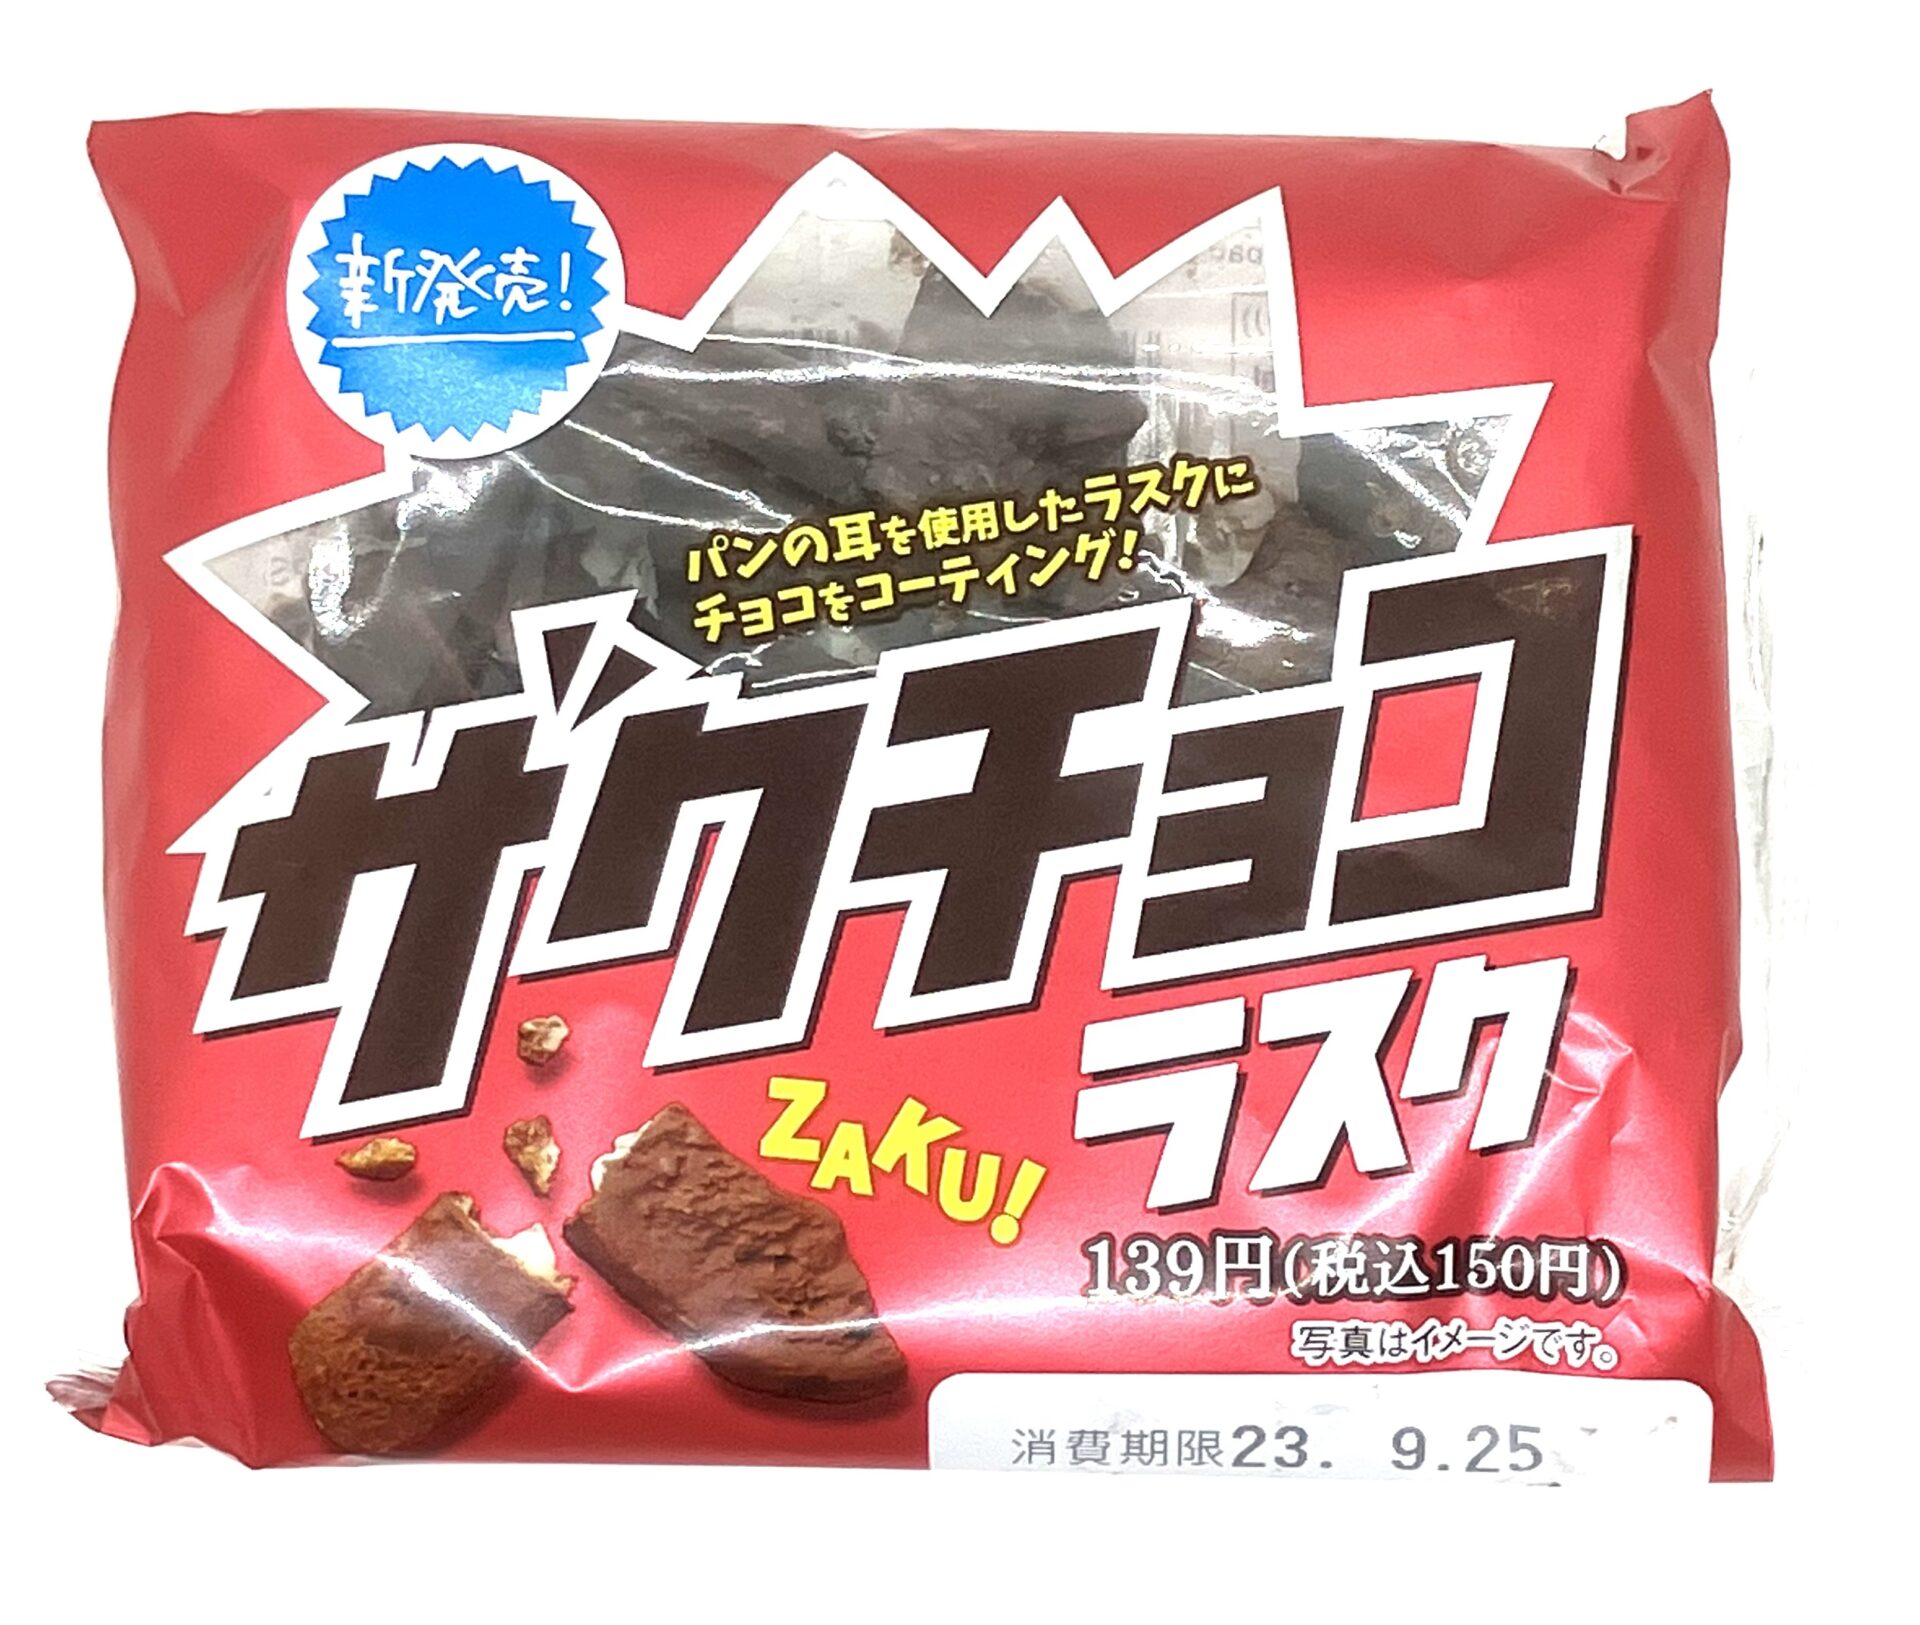 familymart-sweet-zaku-chocolate-rusk-package